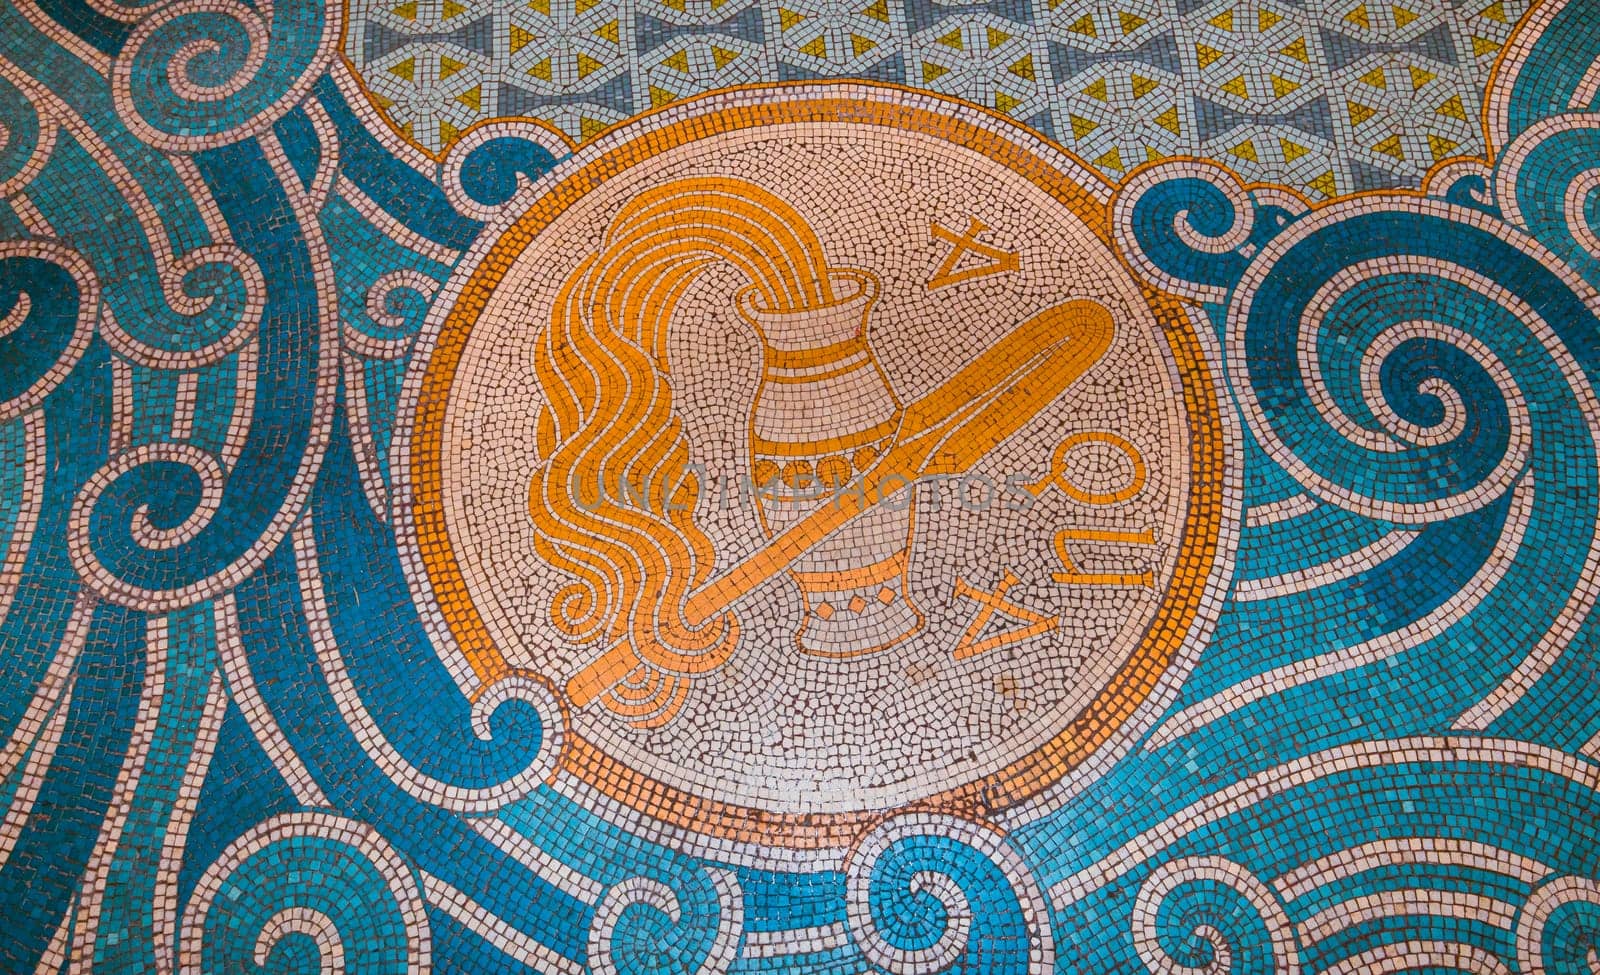 Saint Etienne church in Briare, Loiret, France, pavement mosaic by photogolfer